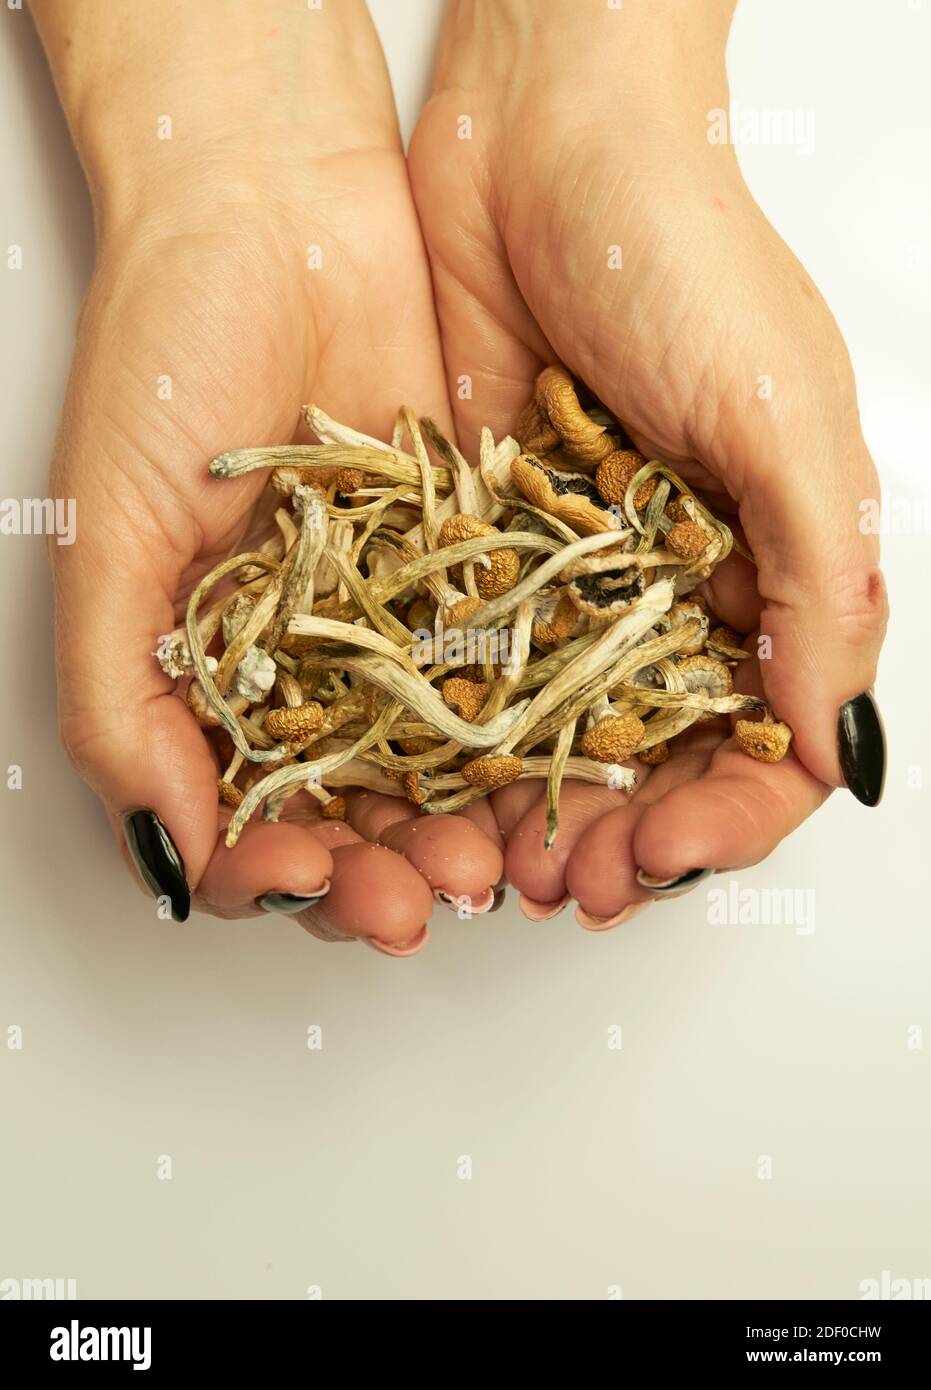 Hands holding dried psilocybin mushrooms Stock Photo